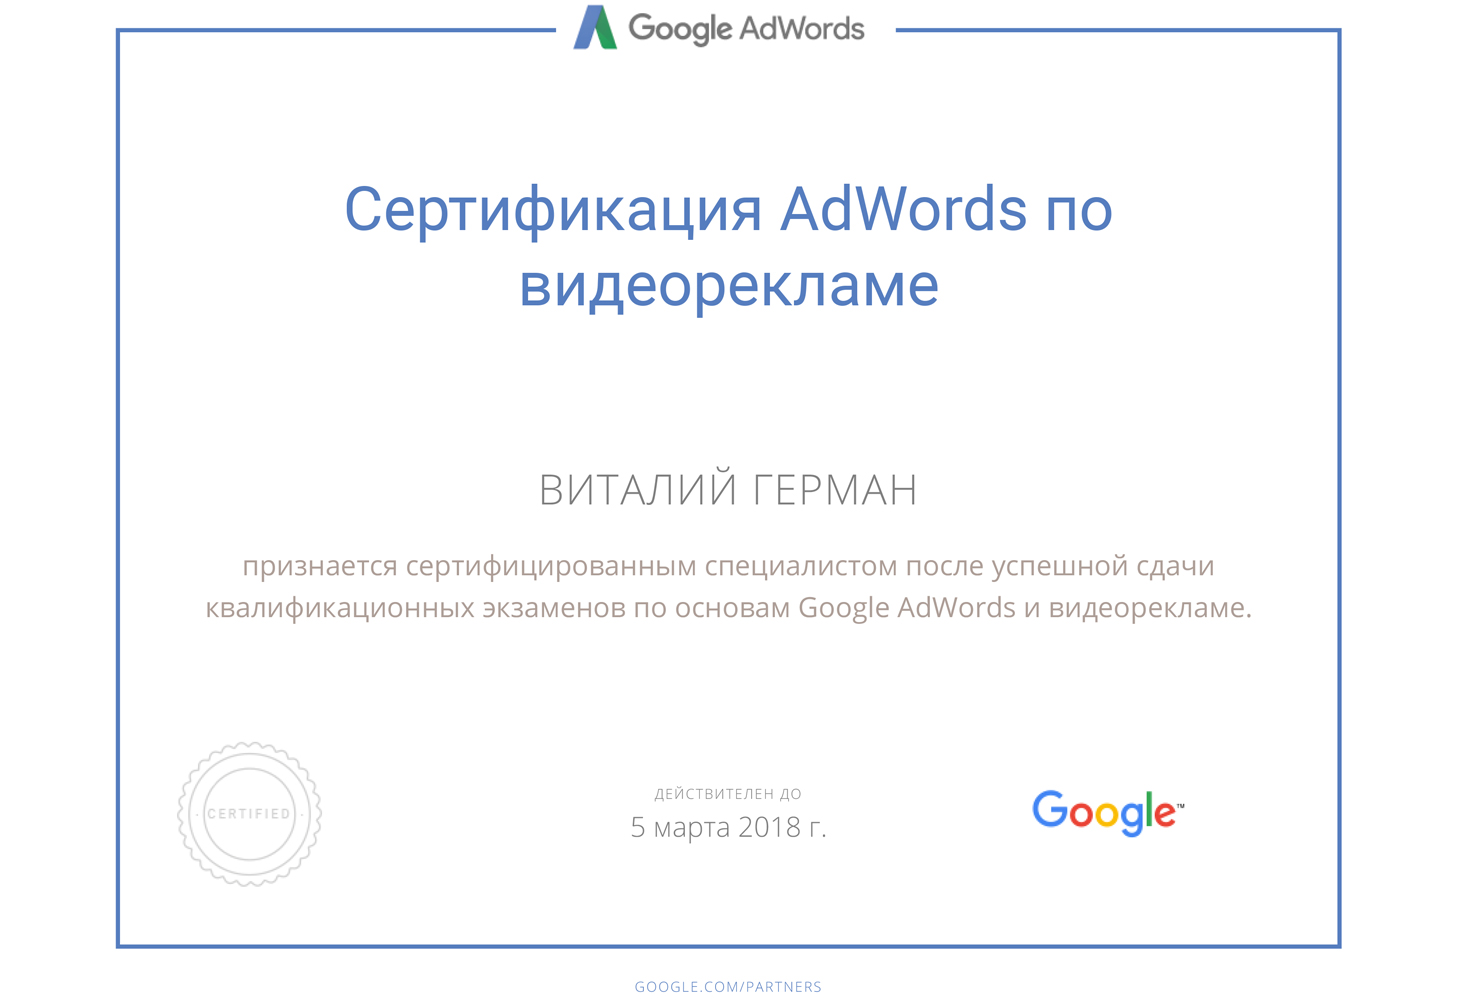 Сертификация Google Adwords видеореклама 2017